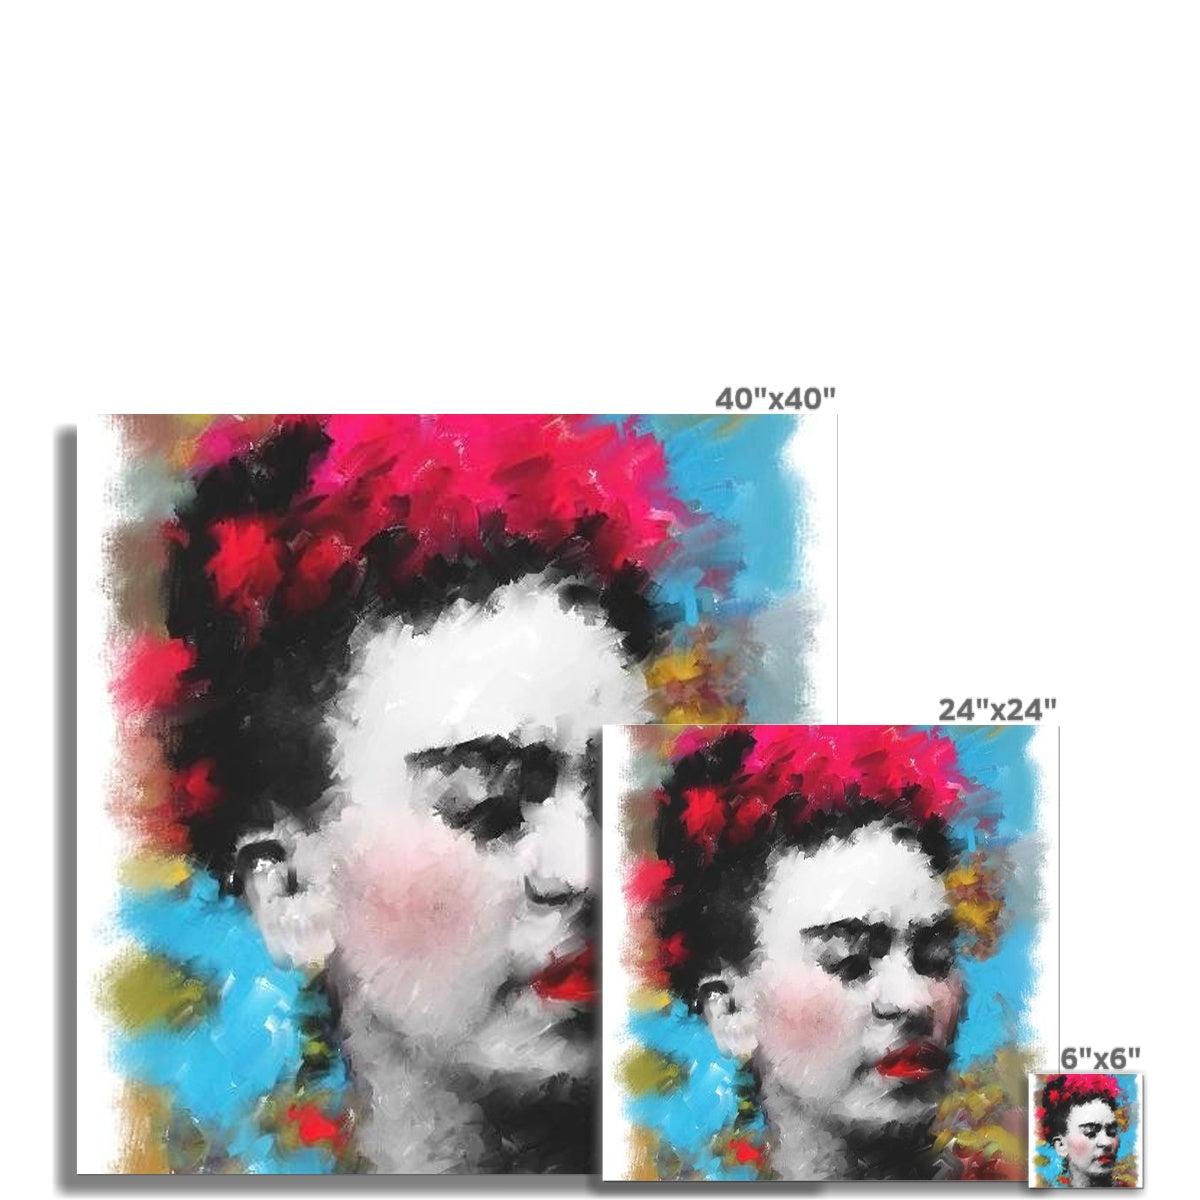 Frida Kahlo - Portrait Hahnemühle German Etching Print